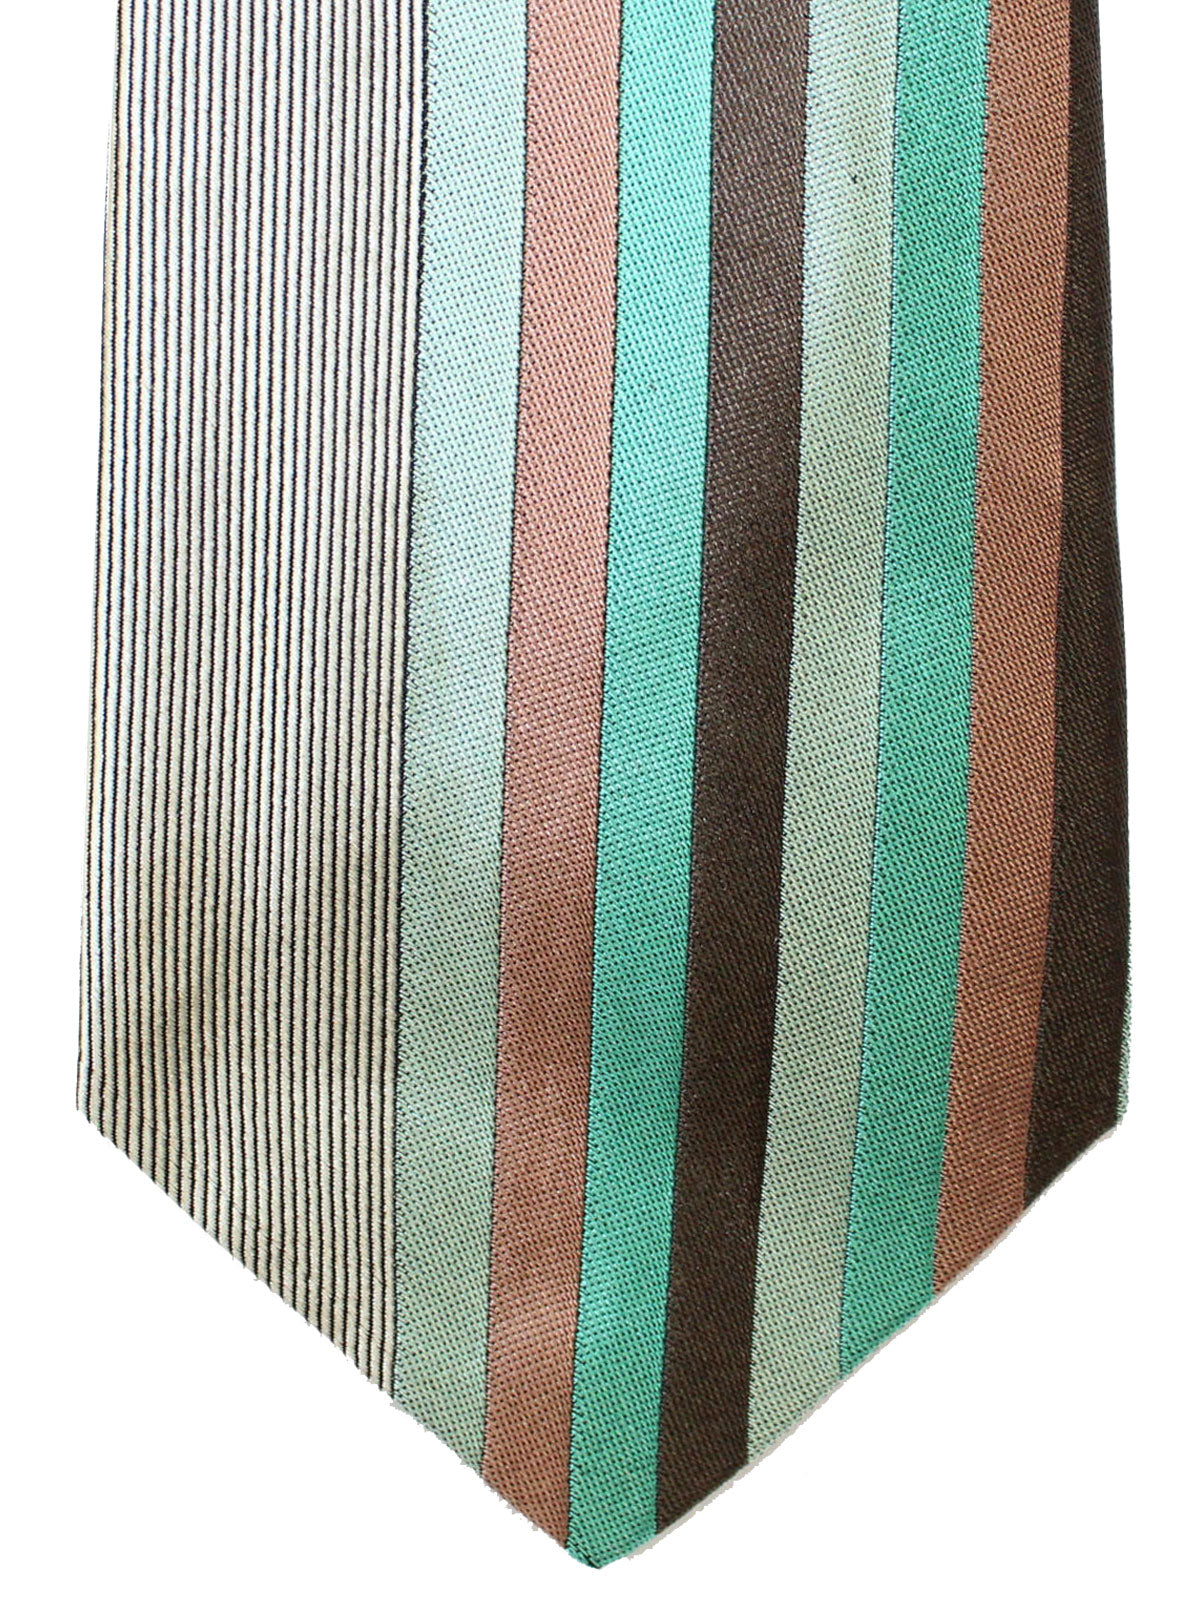 Gene Meyer Silk Tie Gray Emerald Geometric